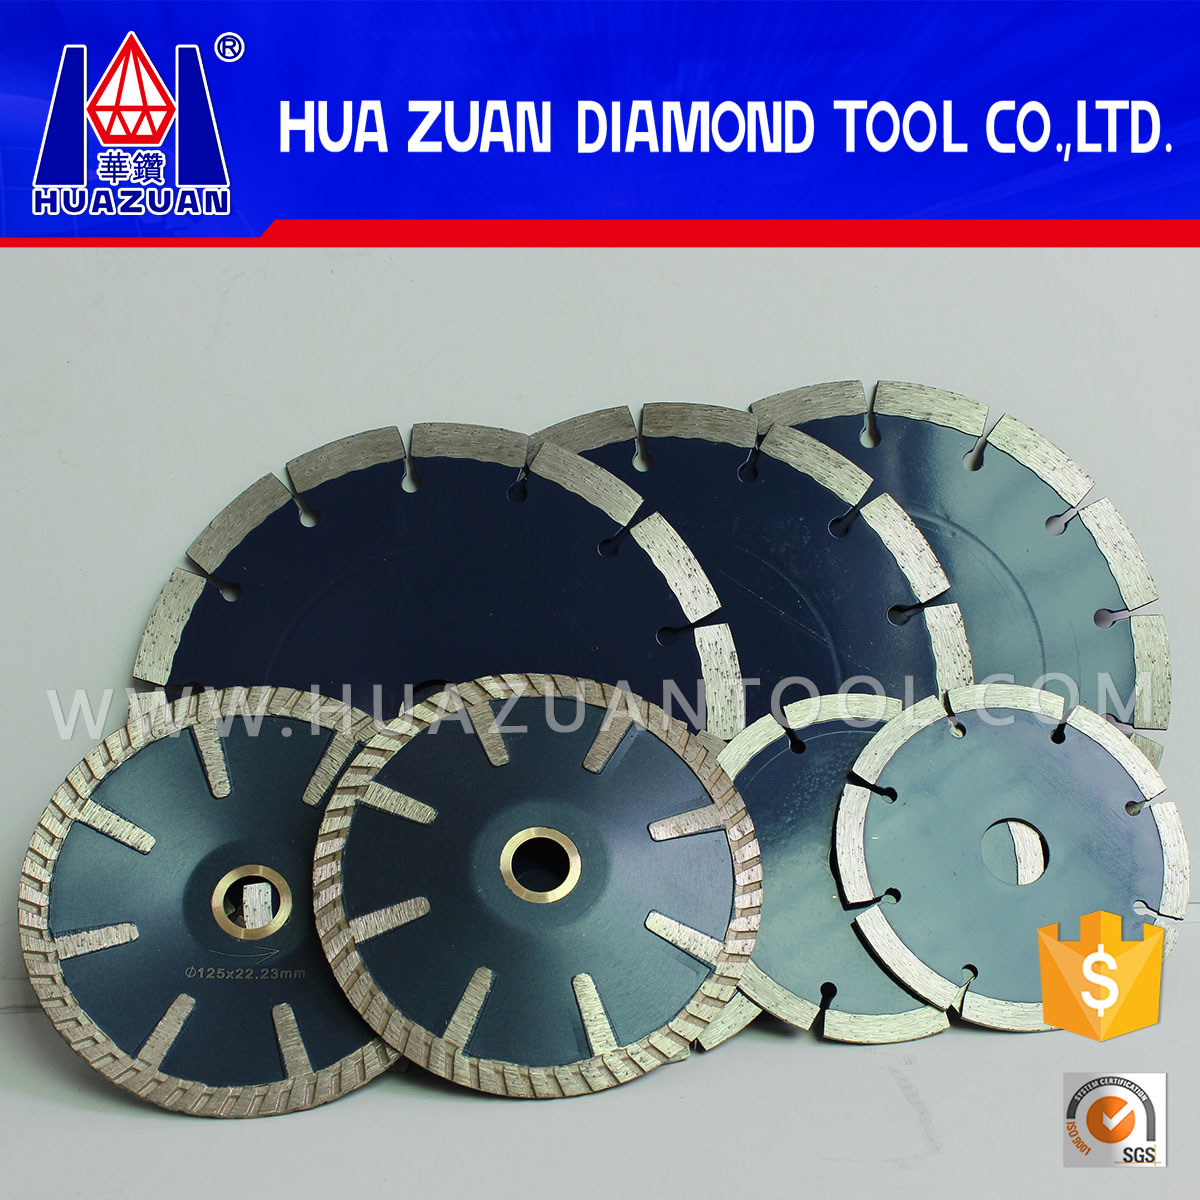 5 Inch Convex Continuous Turbo Diamond Saw Blades/Diamond Cutting Tools